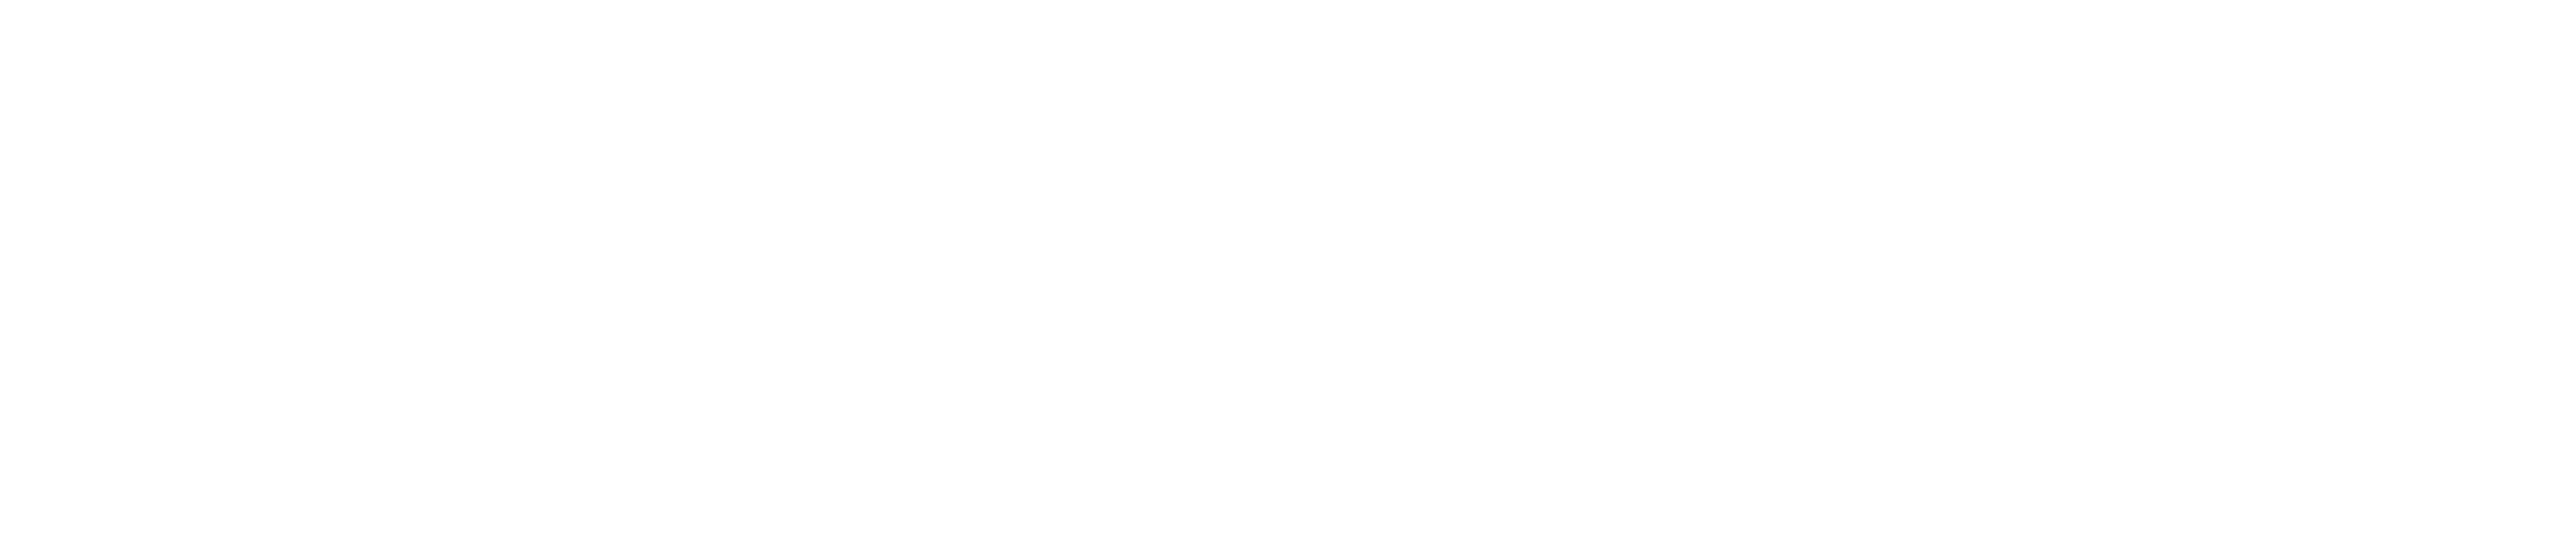 Moodmats logo transparent png